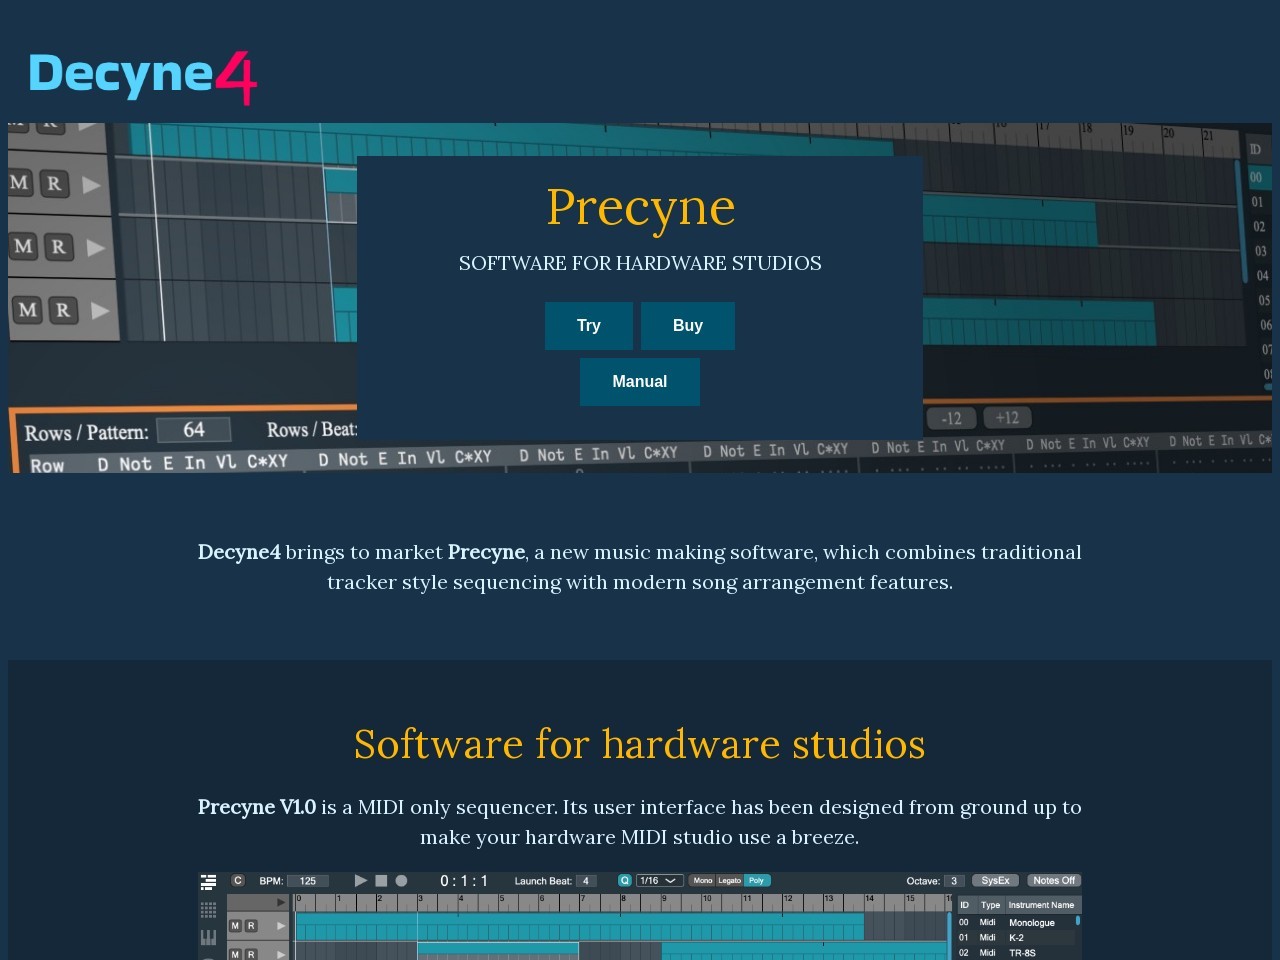 Decyne4 Precyne - MIDI sequencer and tracker software